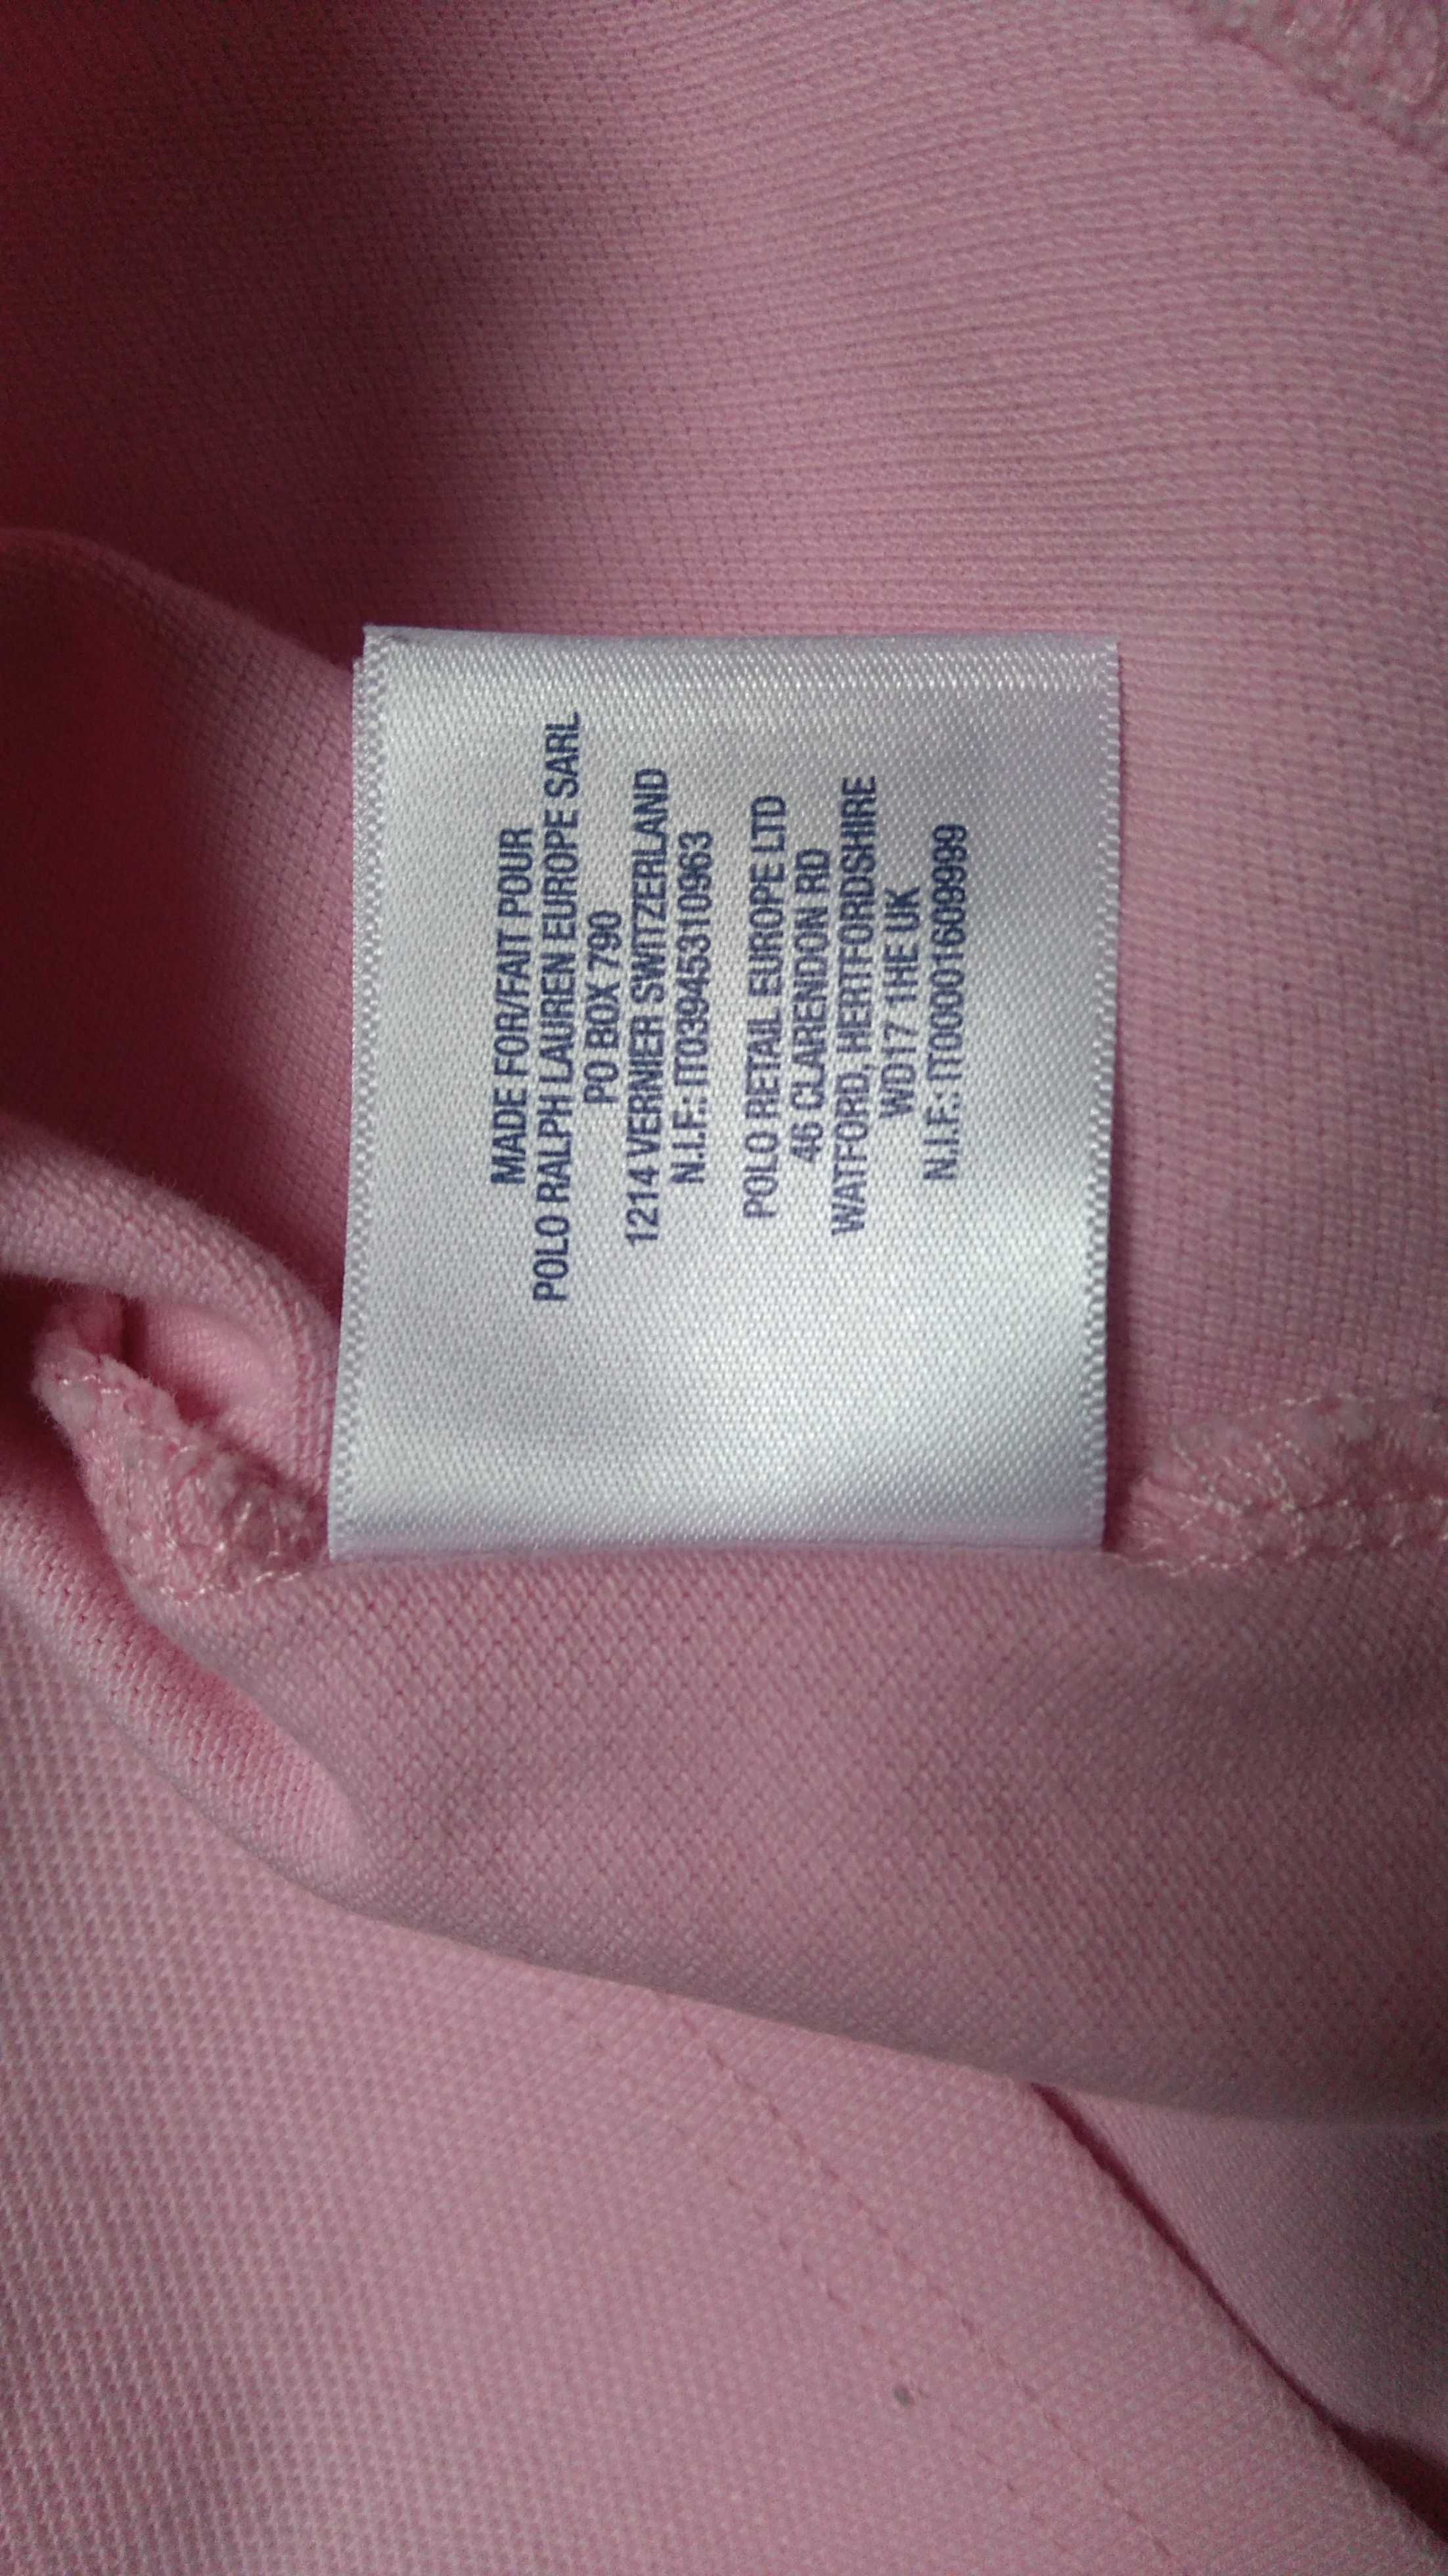 Polo RALPH LAUREN bluzka, koszulka roz. 158-164, 12-14 lat